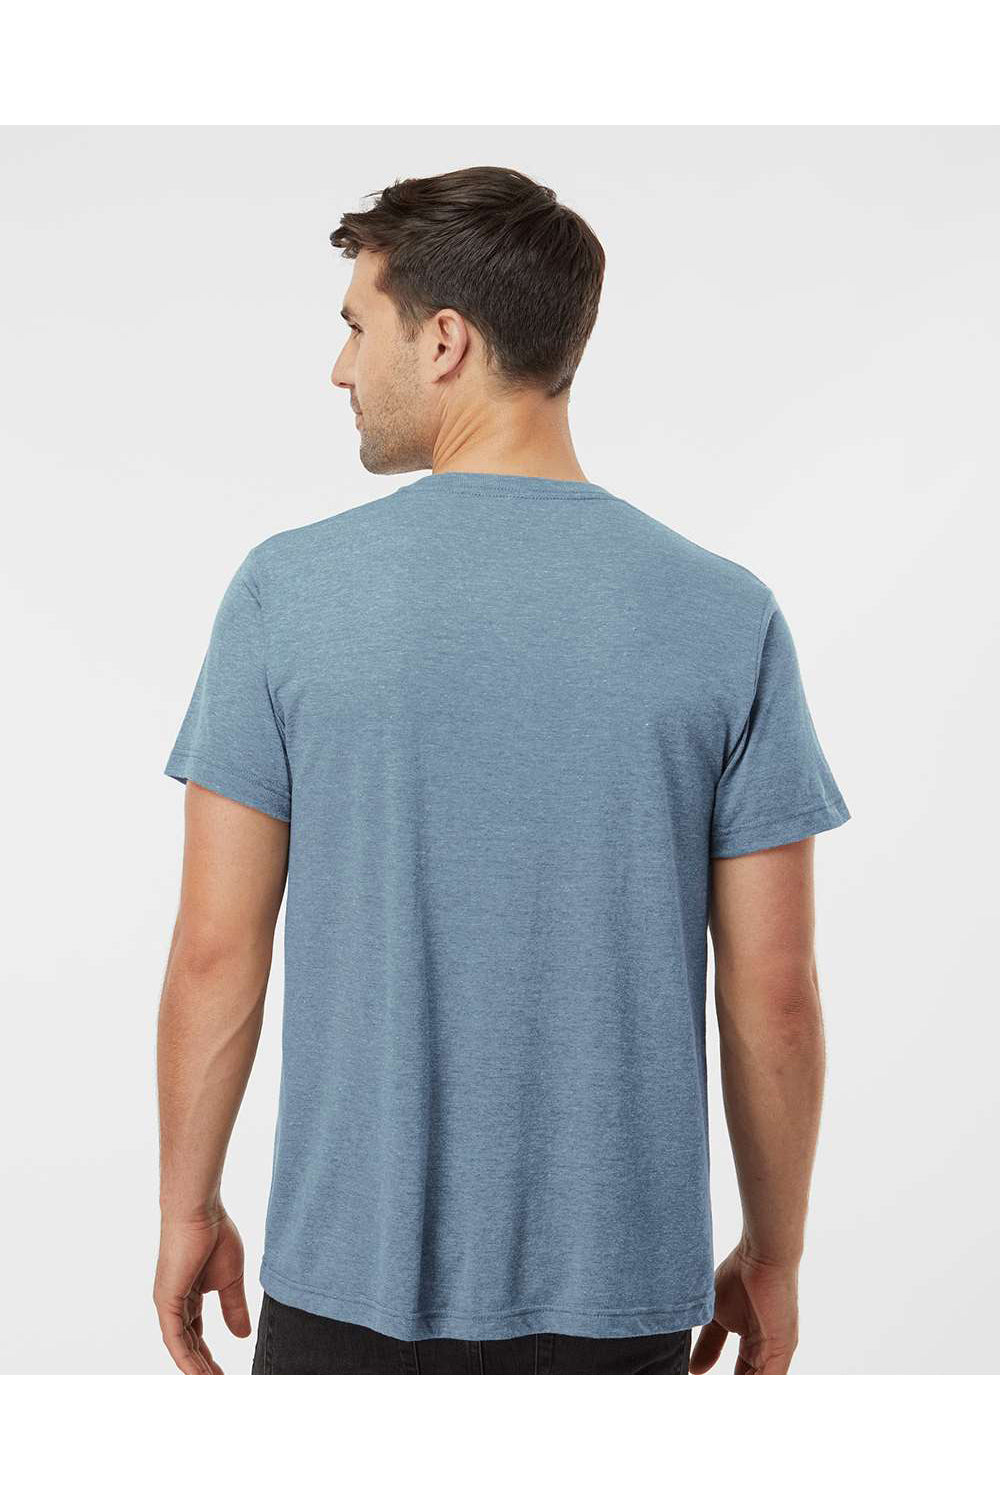 Tultex 254 Mens Short Sleeve Crewneck T-Shirt Denim Blue Model Back